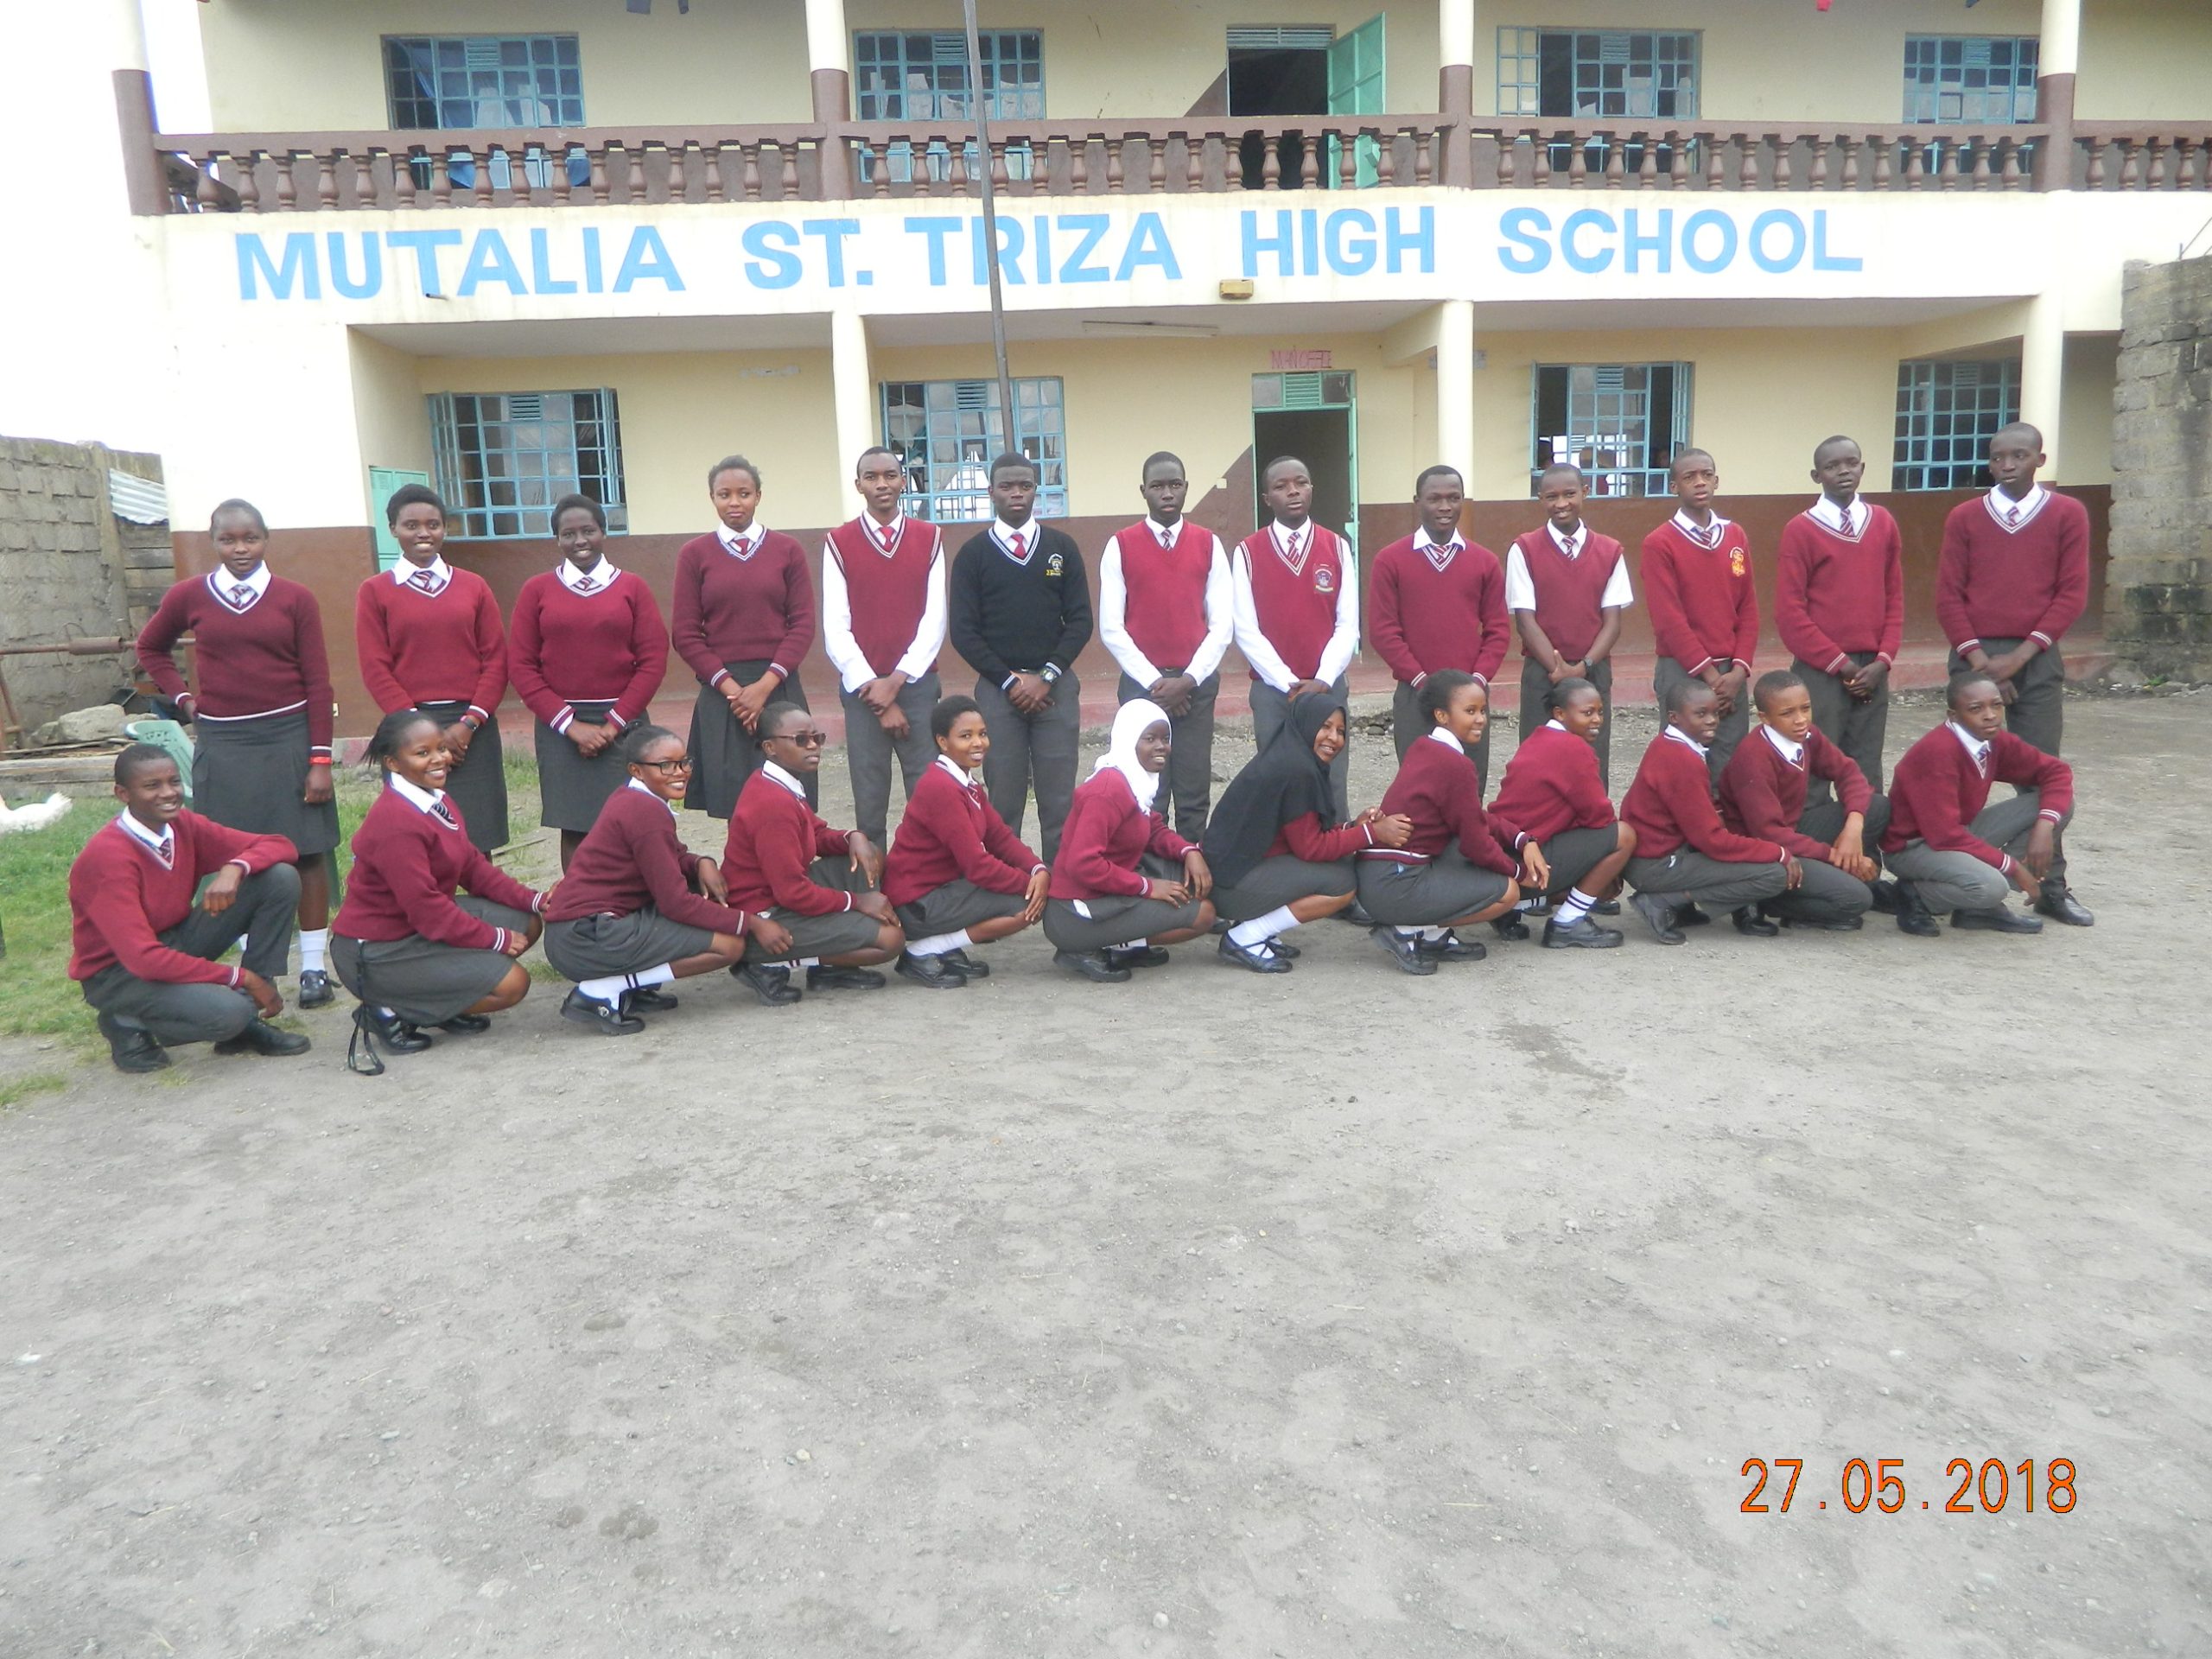 Mutalia St Triza High School